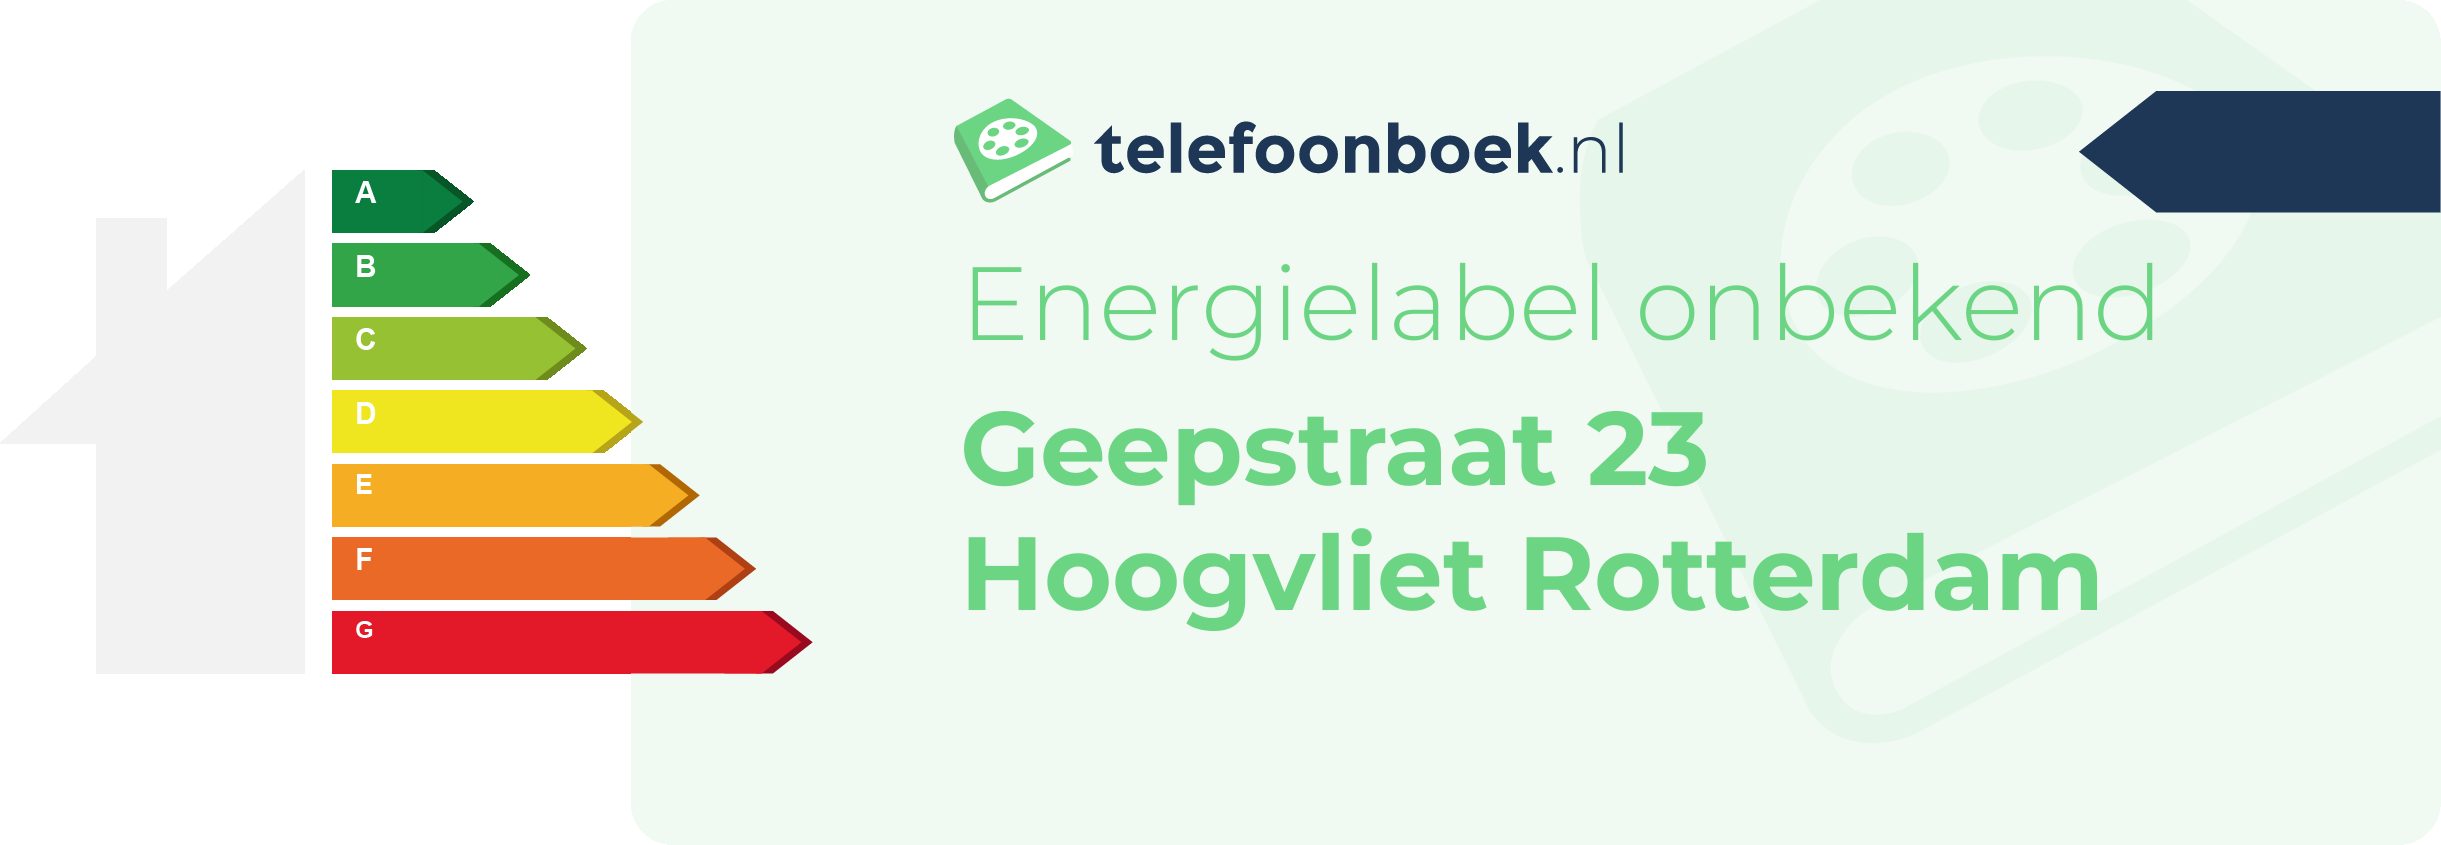 Energielabel Geepstraat 23 Hoogvliet Rotterdam